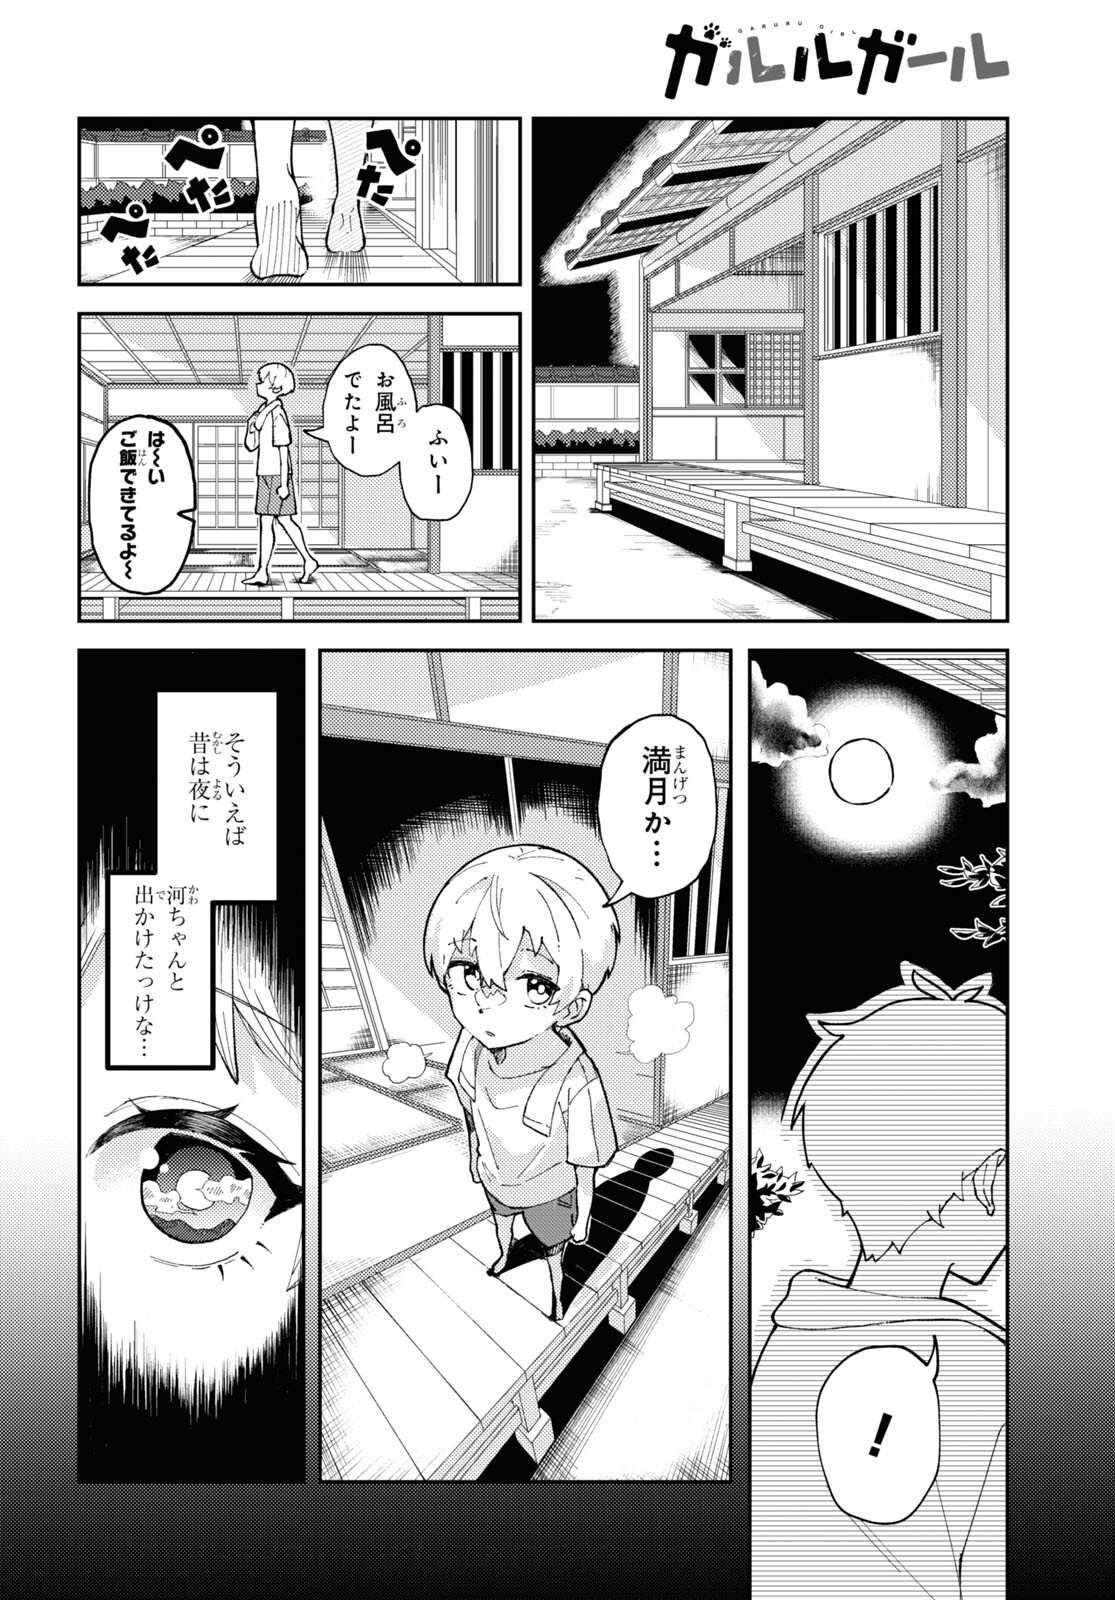 Garuru Girl - Chapter 1 - Page 11